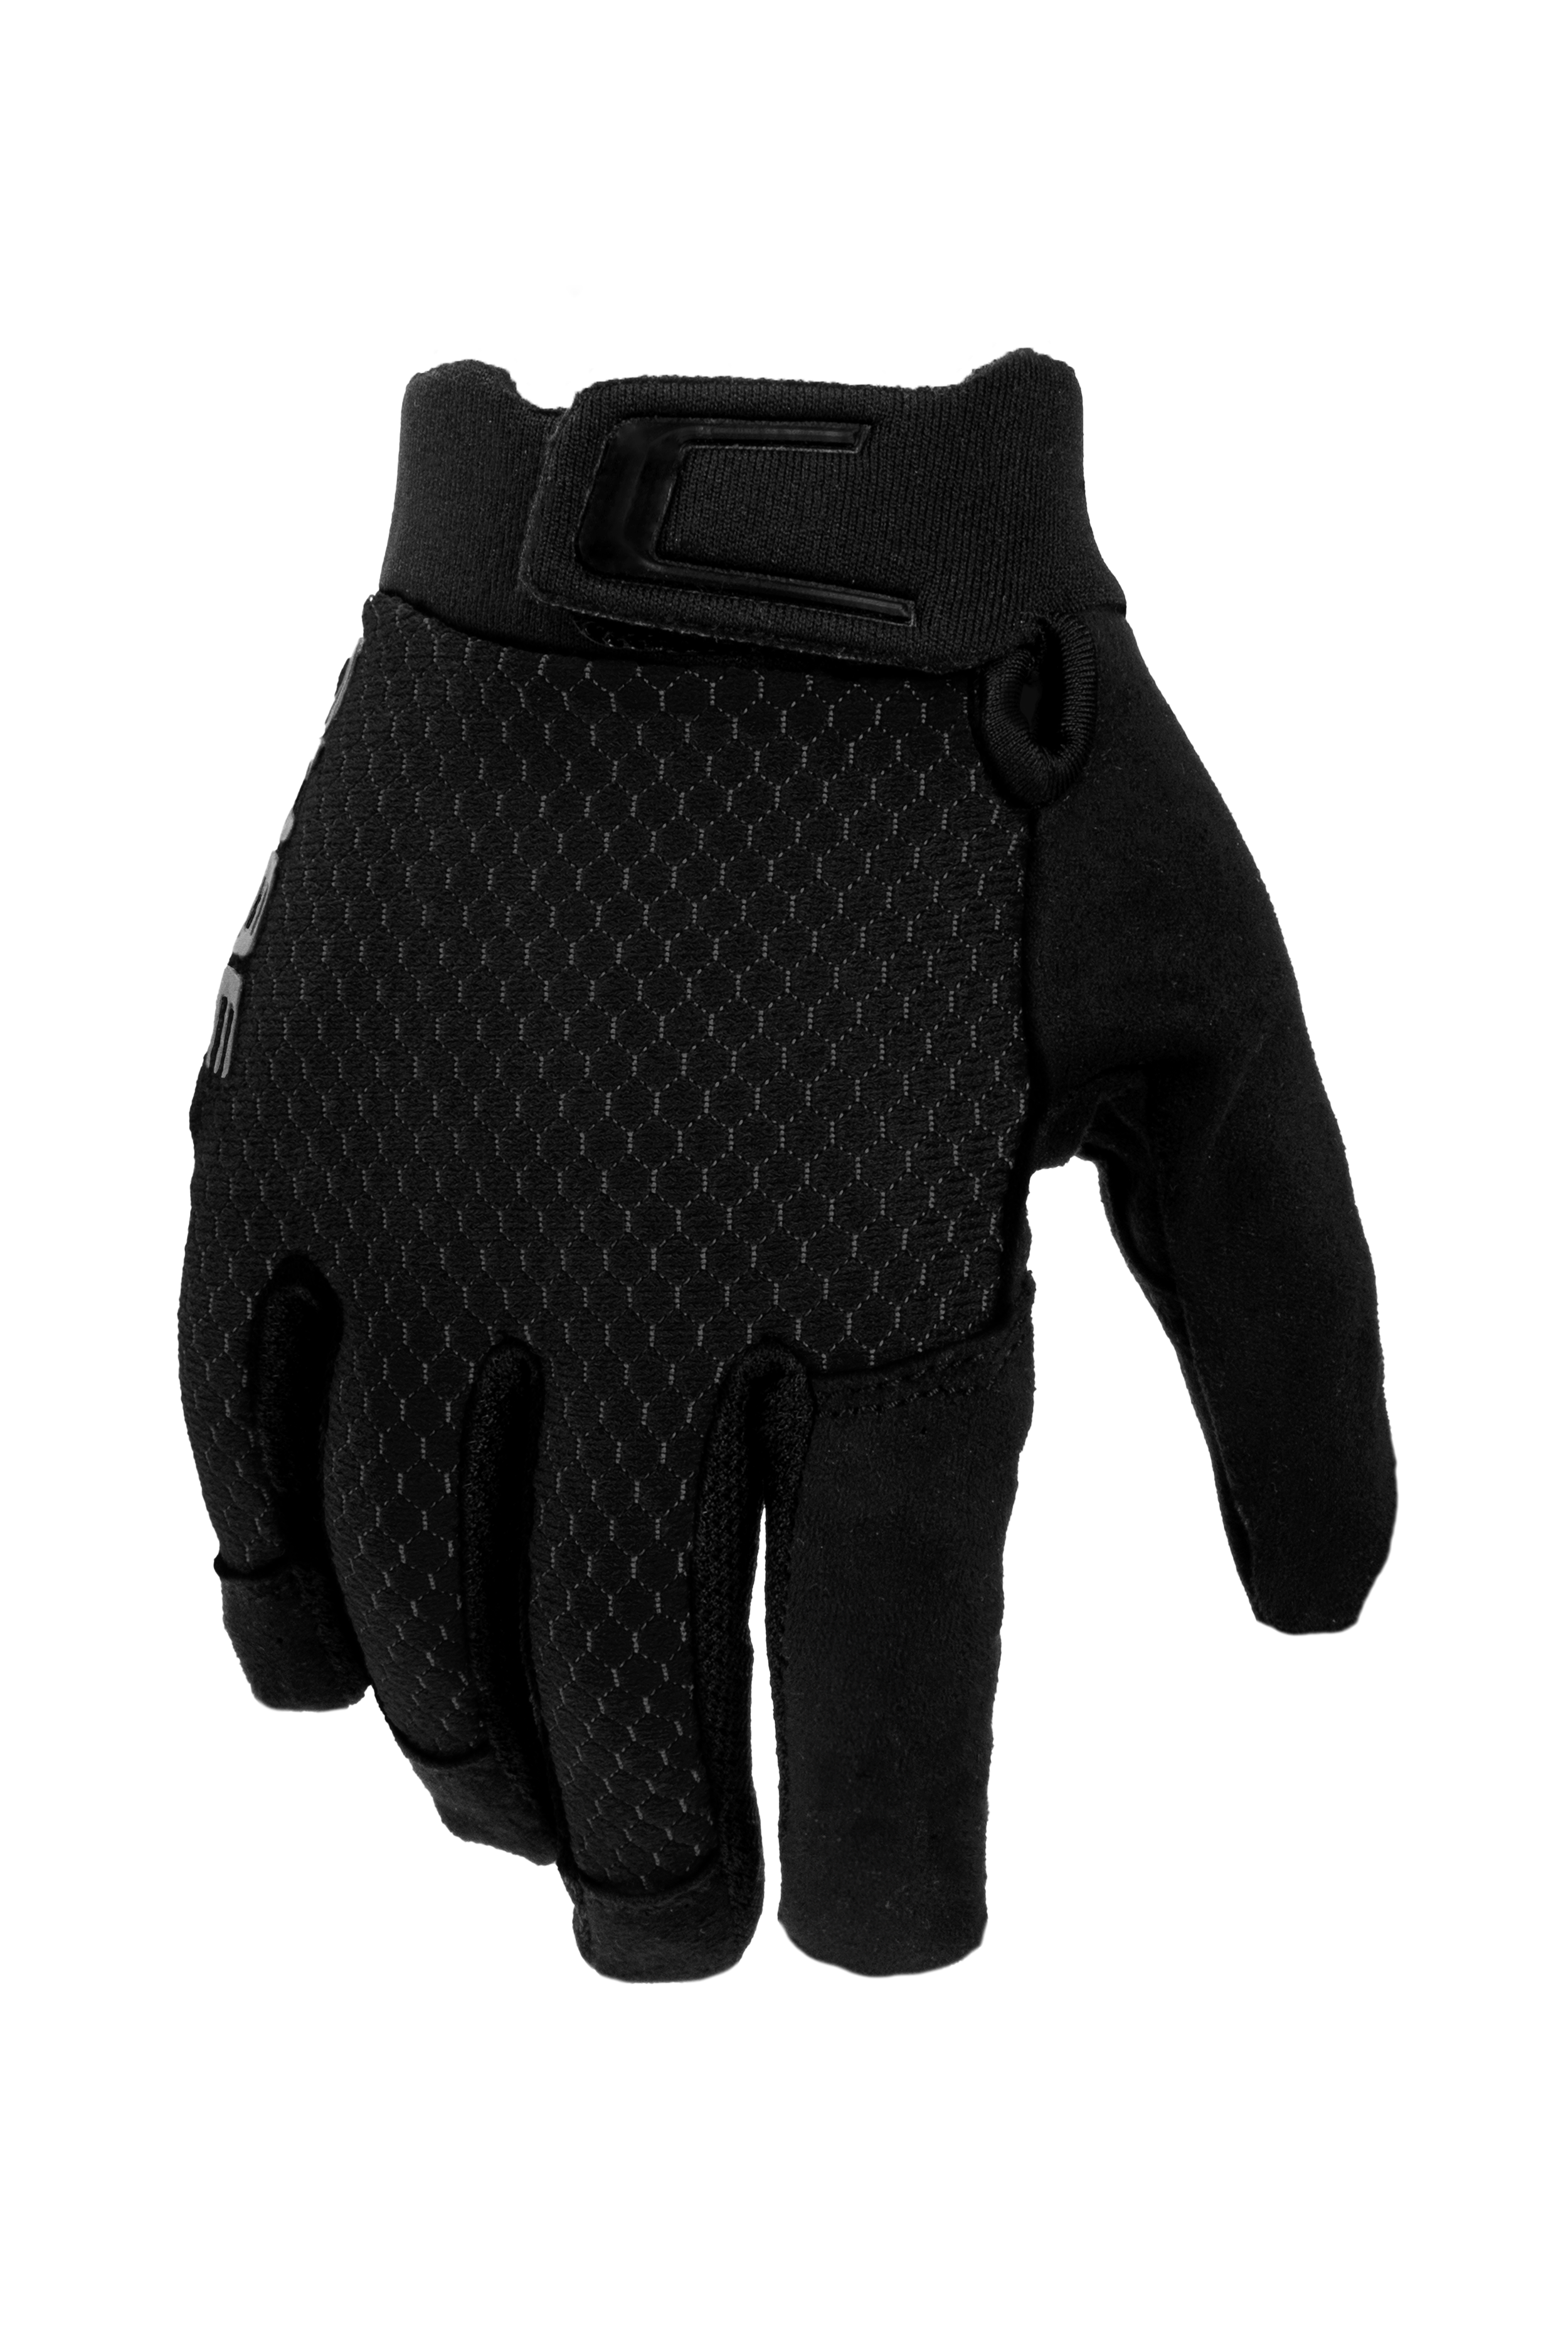 CUBE Gloves ROOKIE long finger